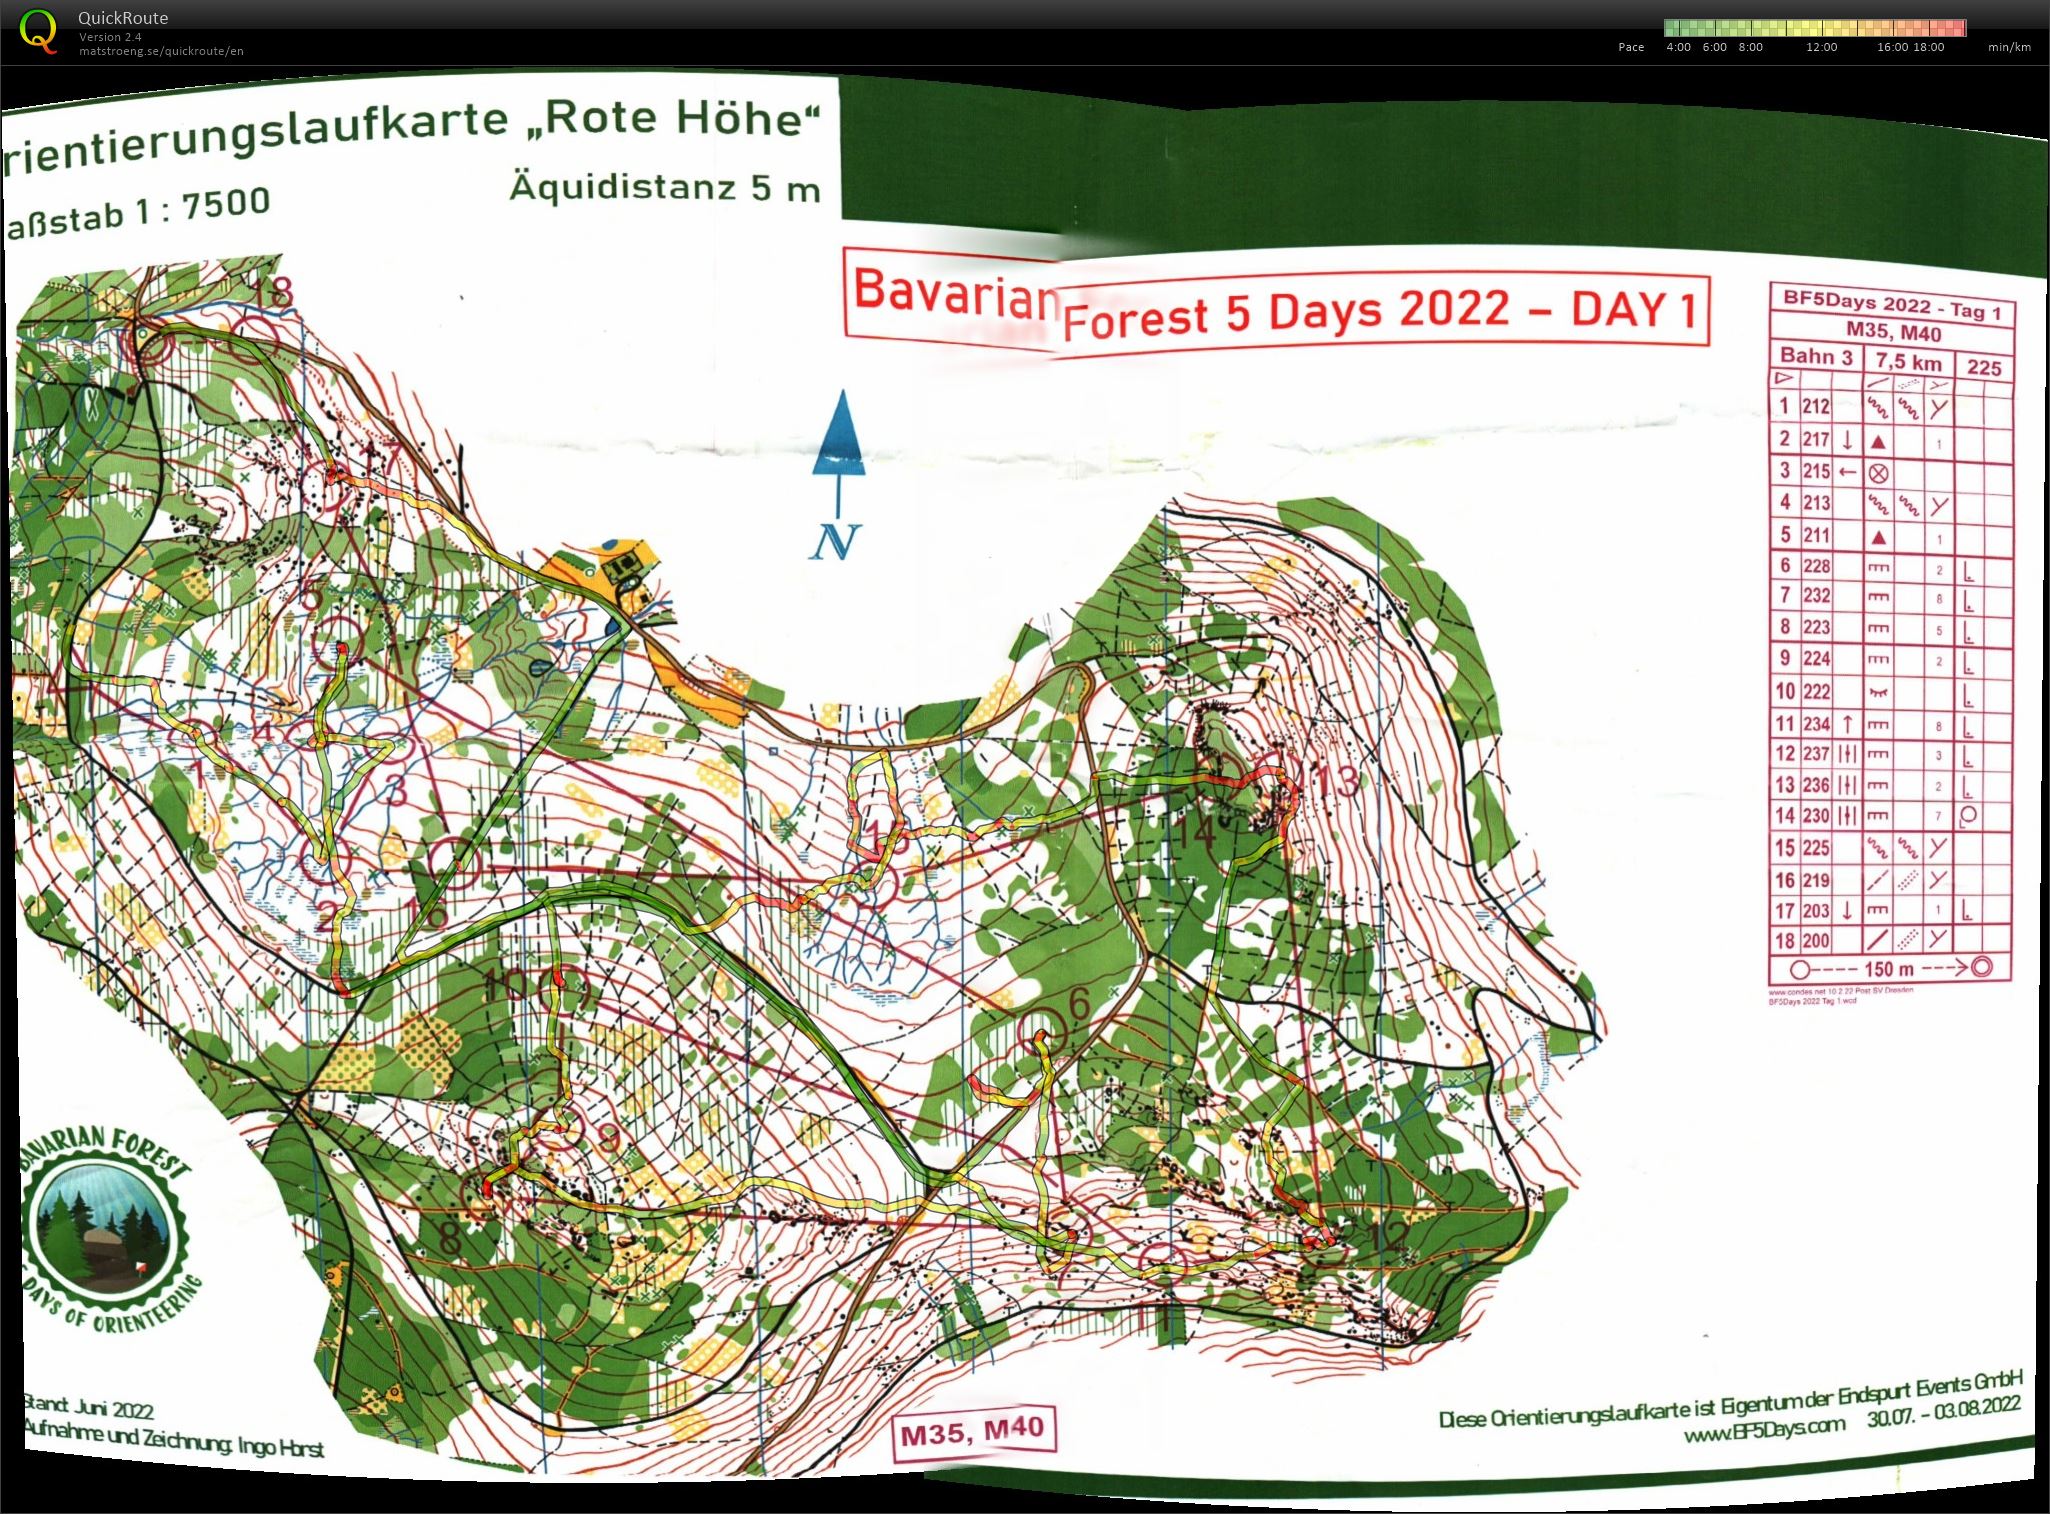 Bavarian Forest 5 Days - Day 1 (30/07/2022)